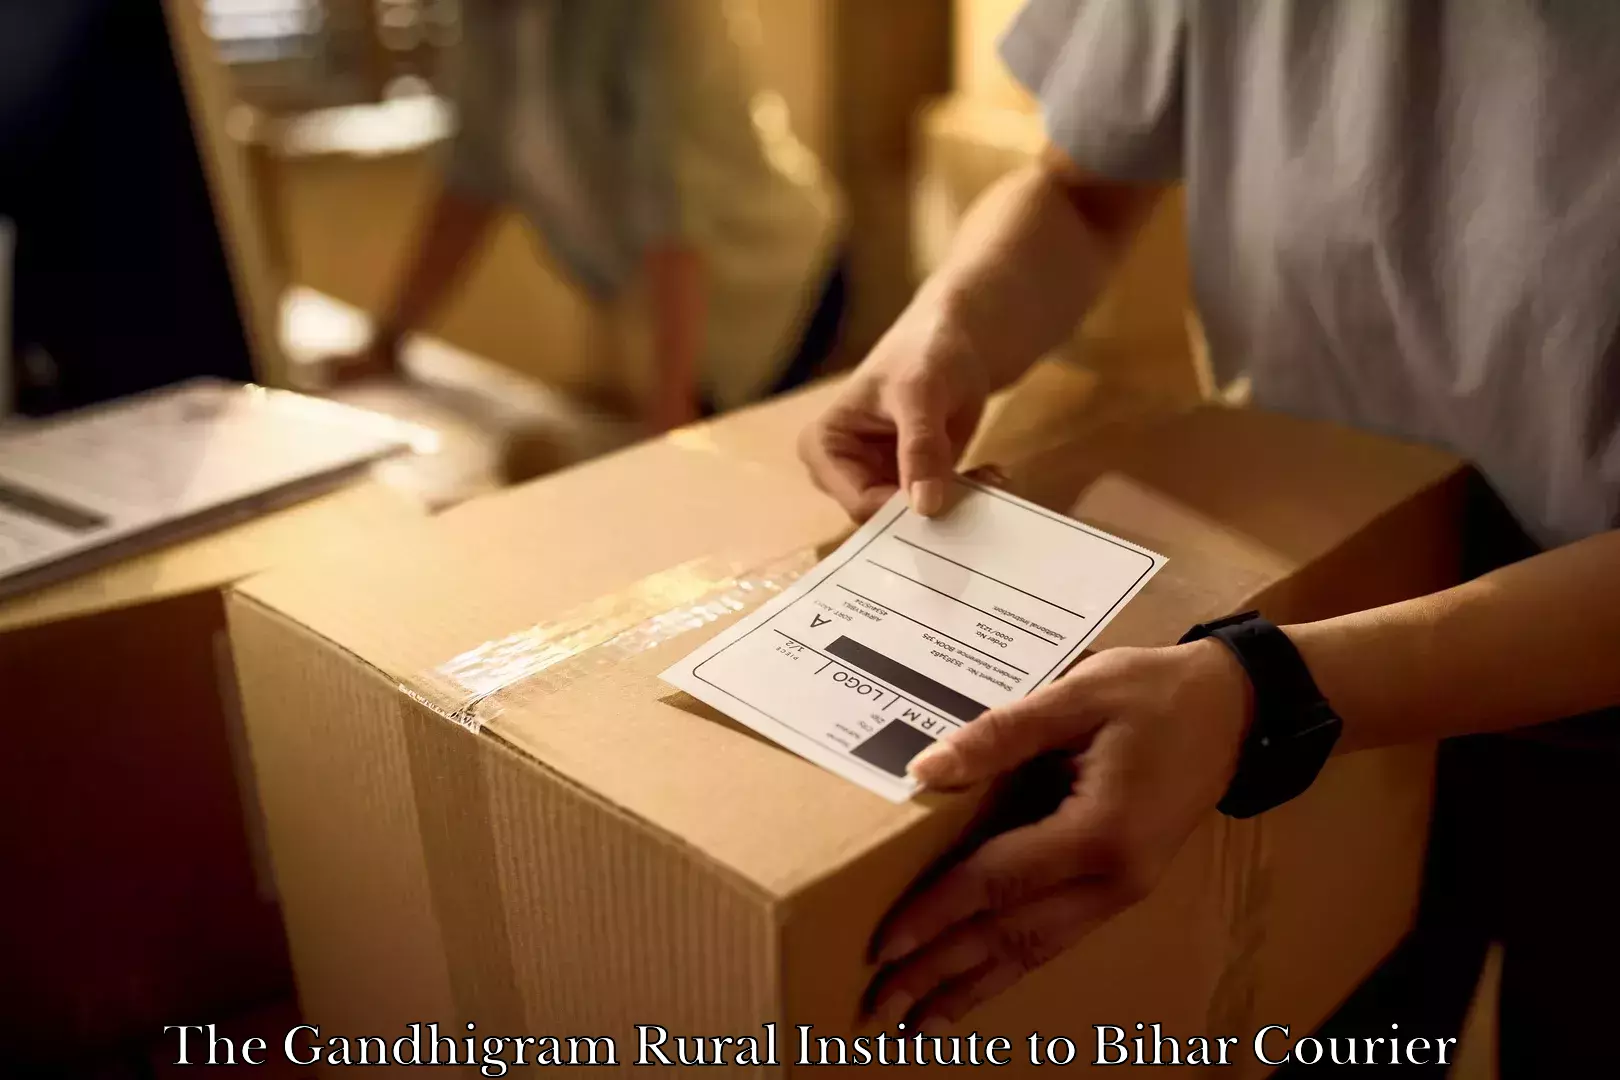 Furniture moving assistance The Gandhigram Rural Institute to Bihar